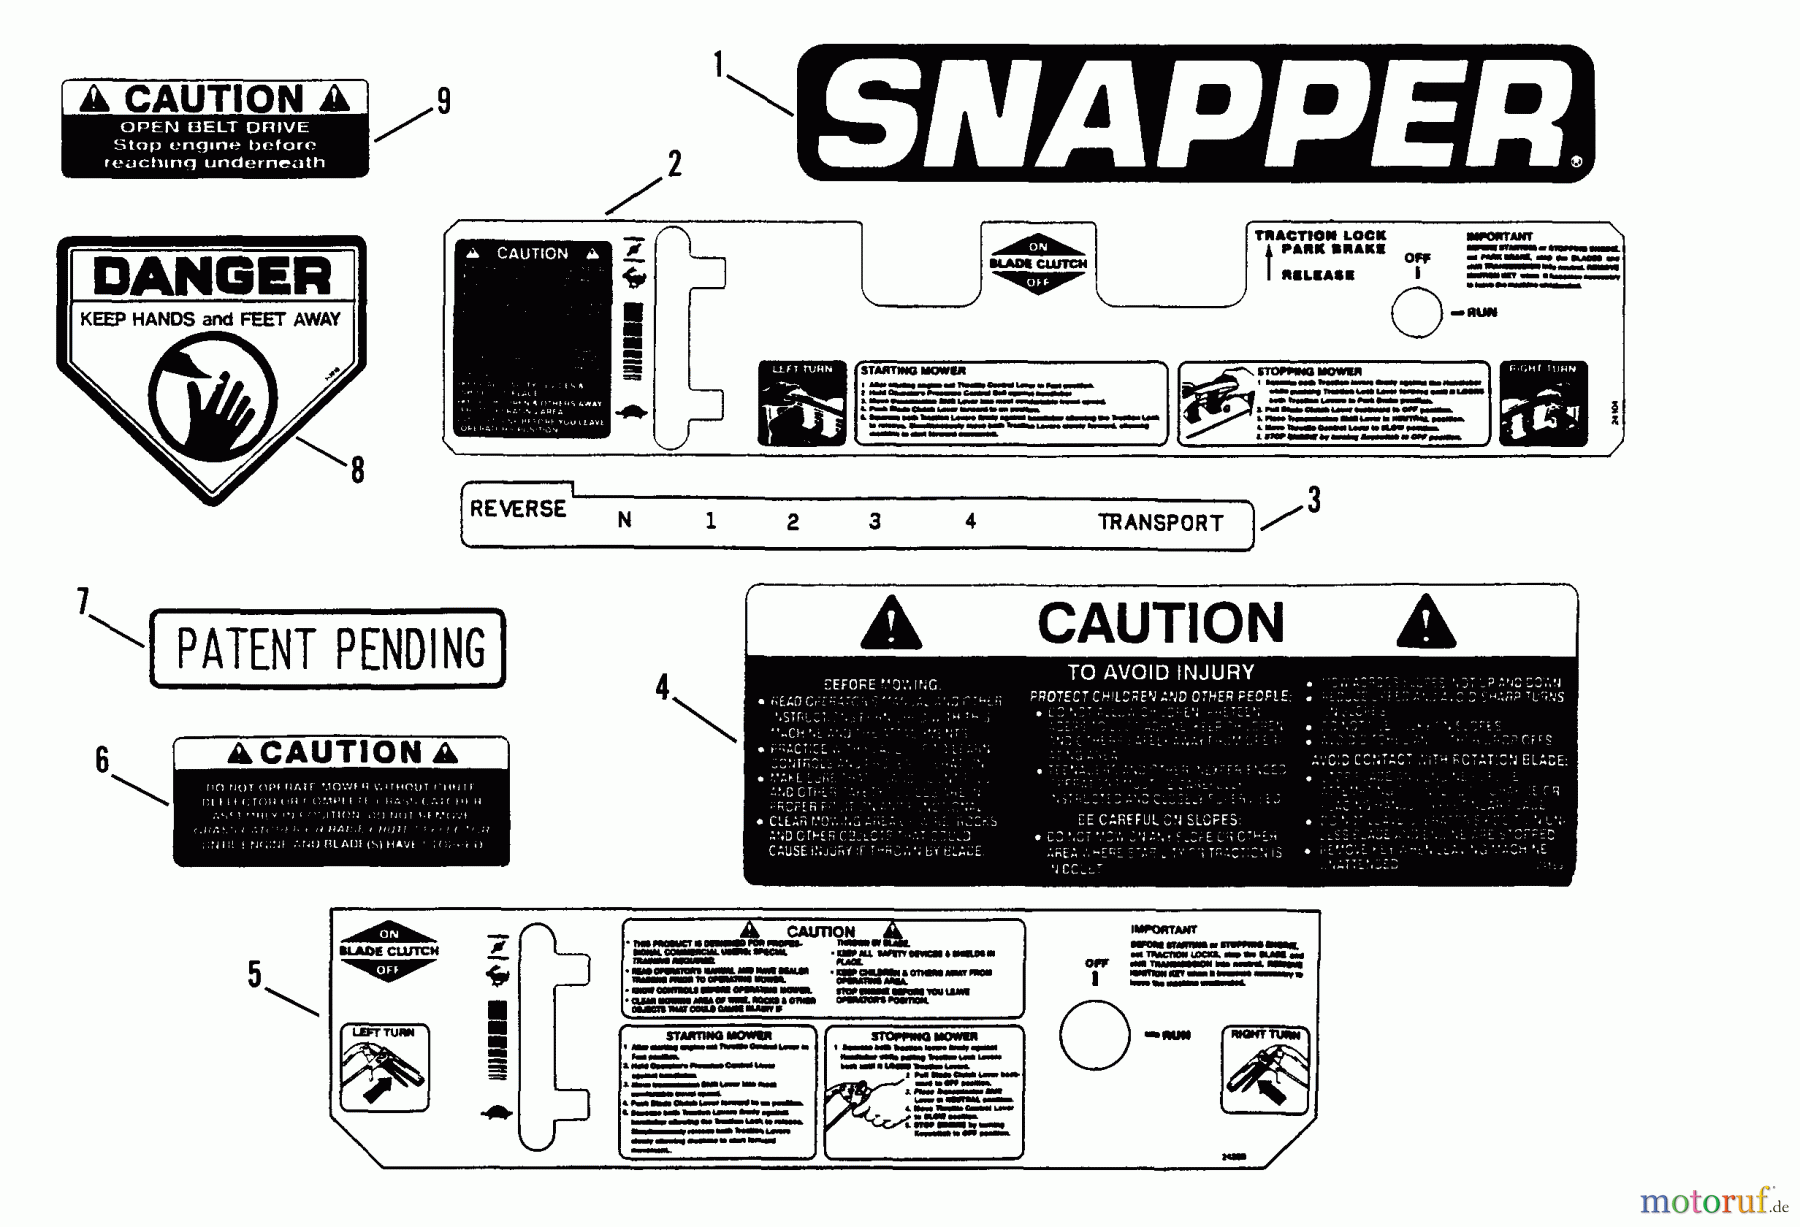  Snapper Rasenmäher für Großflächen PP71251KW - Snapper Wide-Area Walk-Behind Mower, 12.5 HP, Gear Drive, Pistol Grip, Series 1 Decals